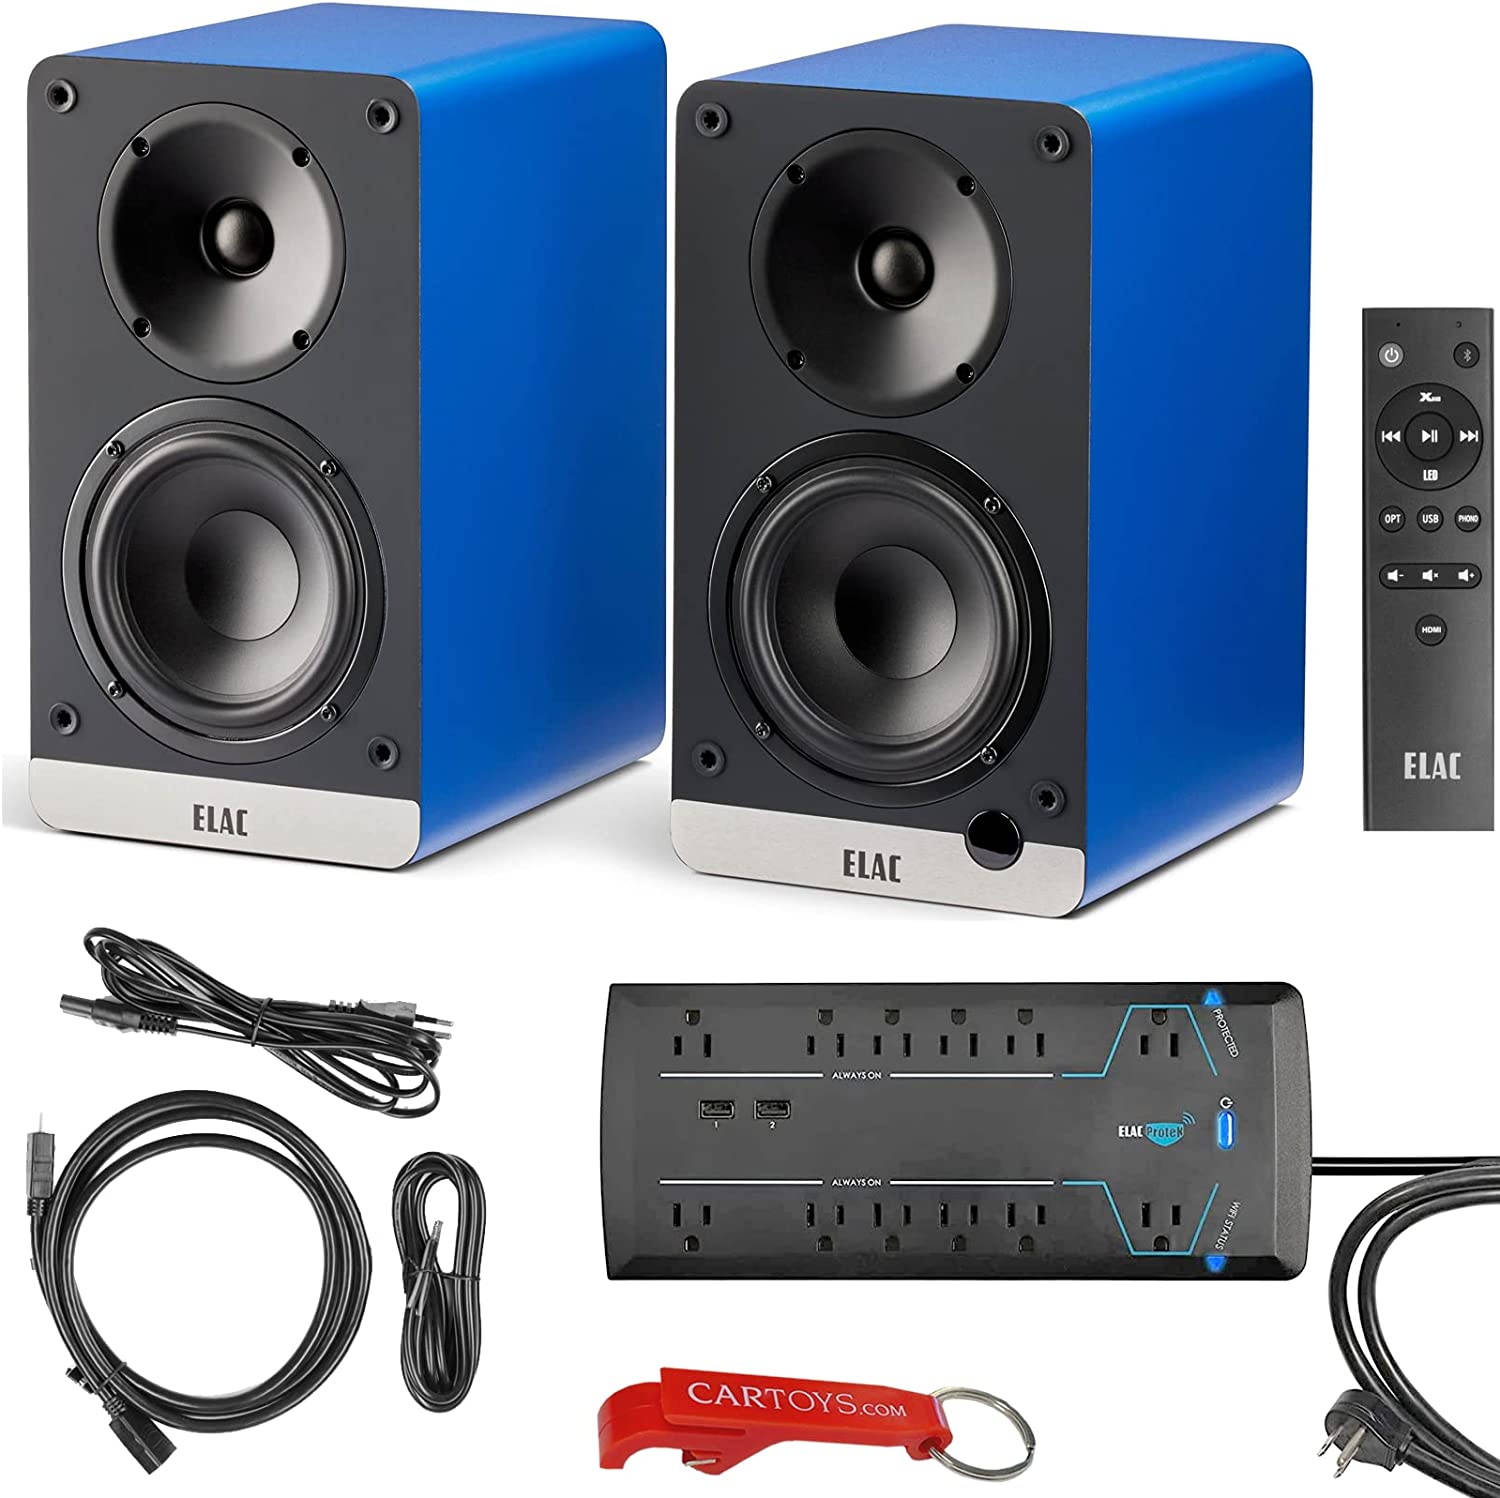 ELAC DCB41 Debut ConneX (Blue) Home Audio Hi-Fi Powered Bookshelf Speakers   Protek Smart Surge Protector. Bluetooth, Class D Amplifiers Built-in,  Enhanced Bass Response, w/Remote  Speaker Wire